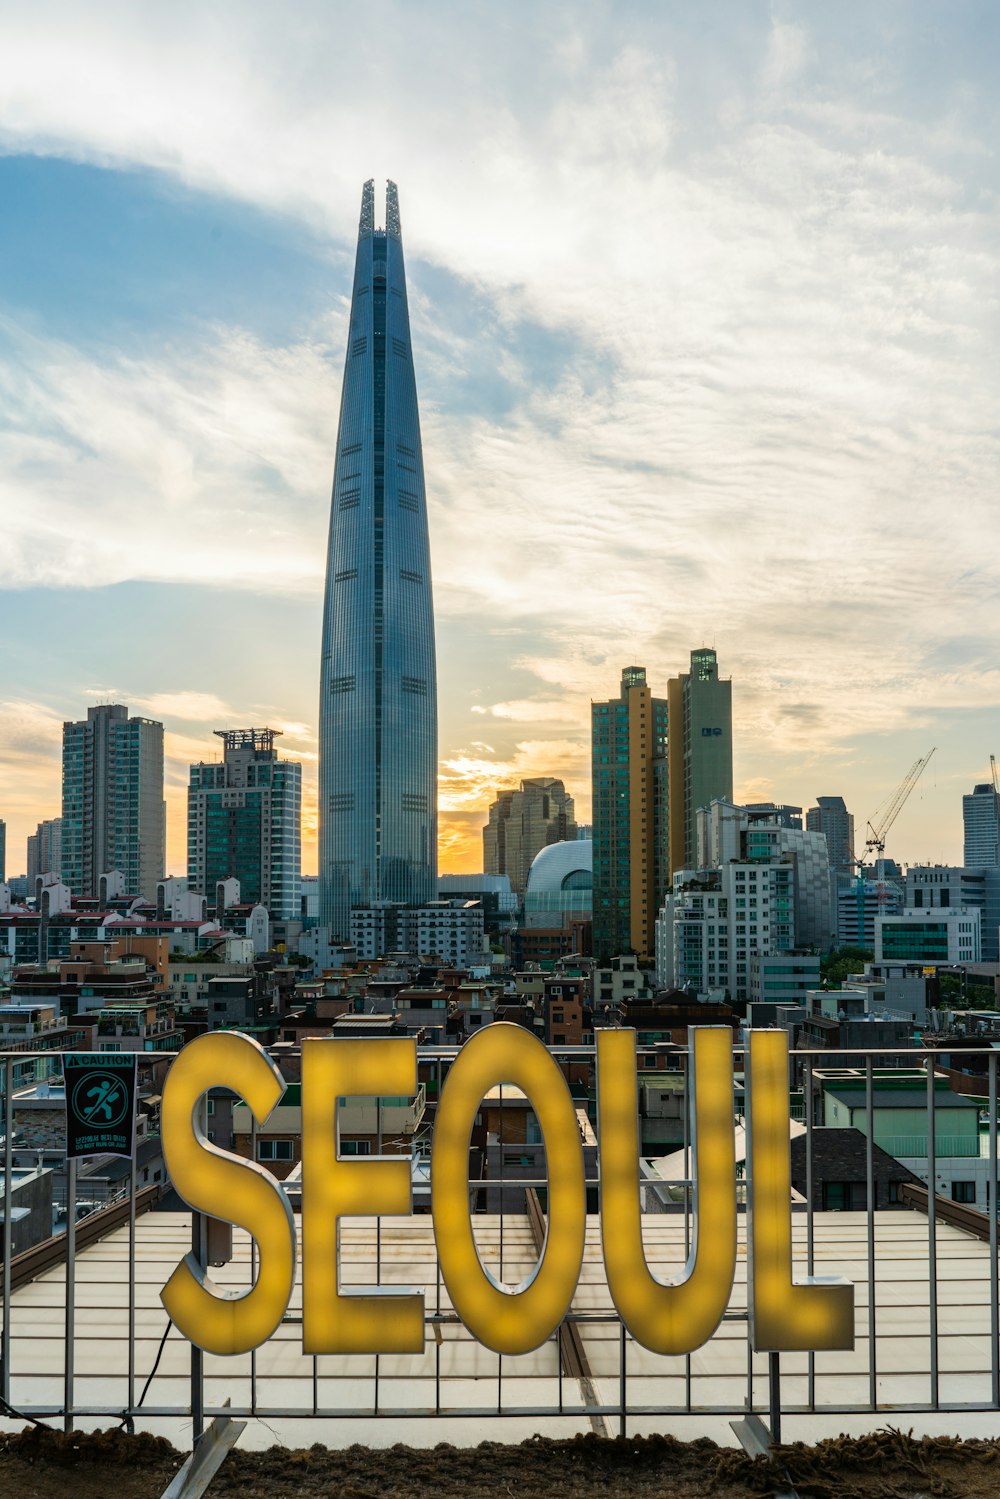 Seoul lighted signage